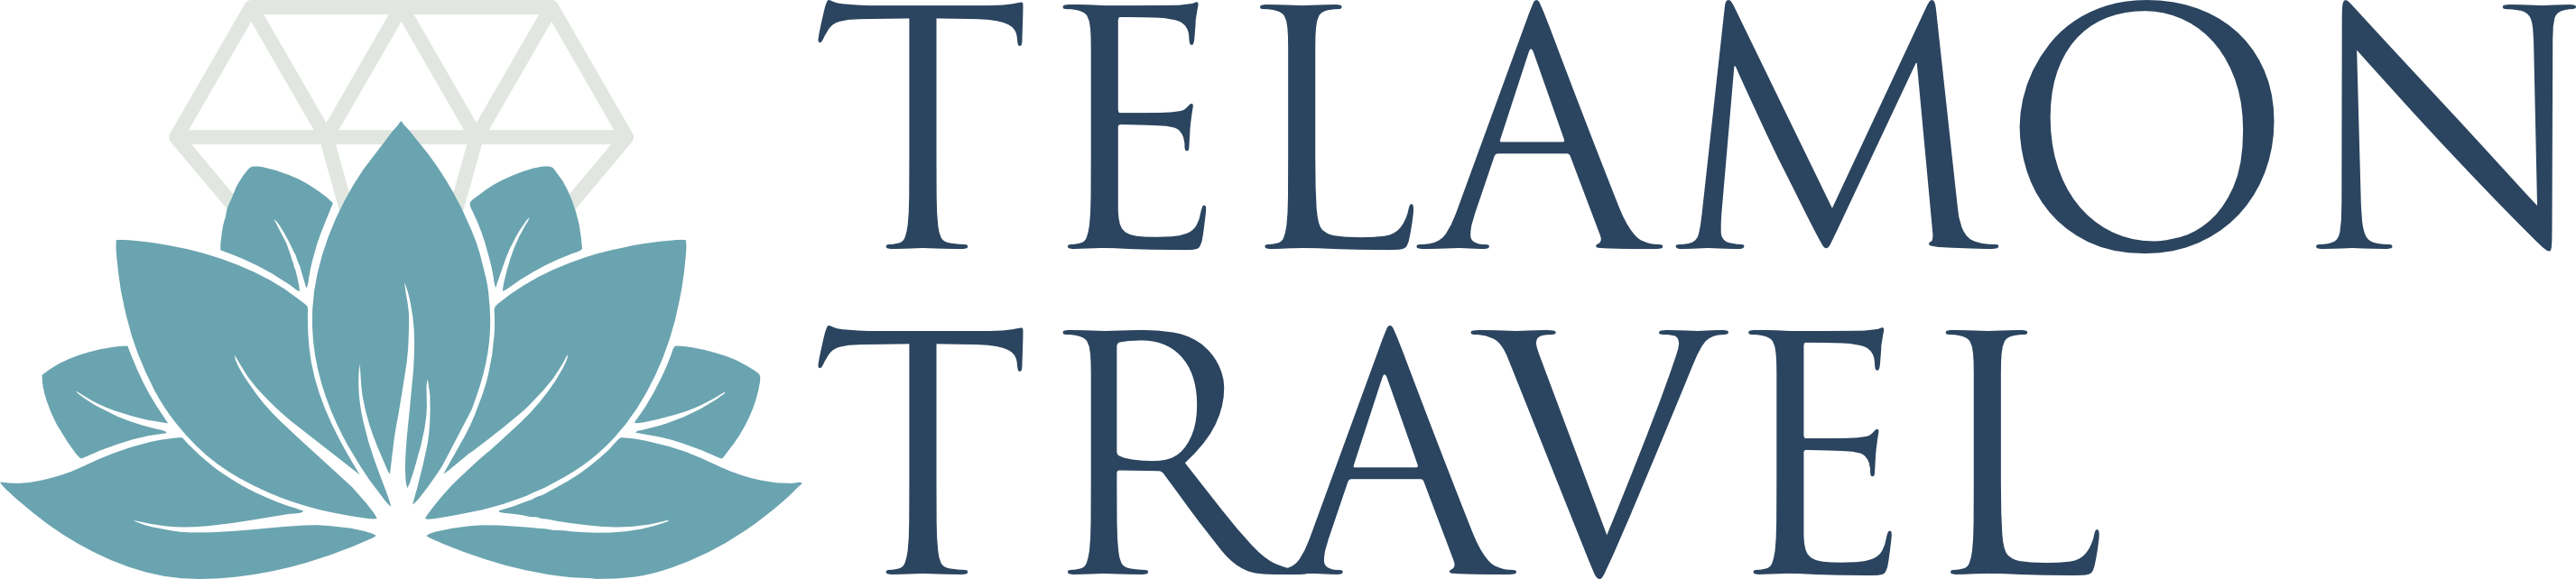 Telamon Travel diamond and lotus logo